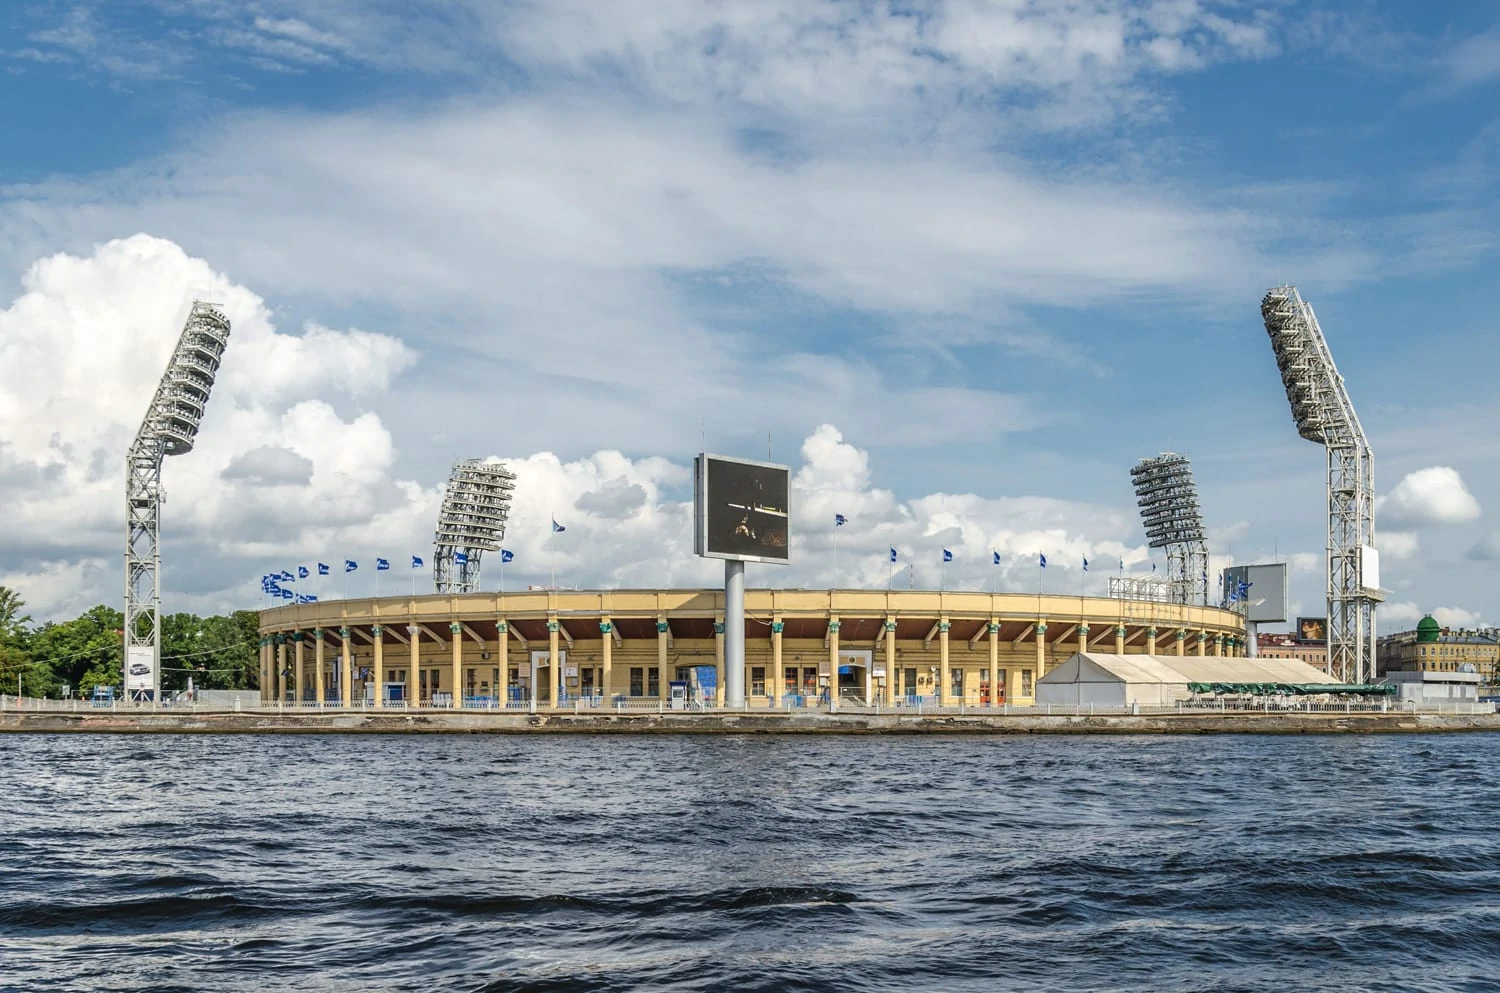 Far away shot of the football stadium in St. Petersburg